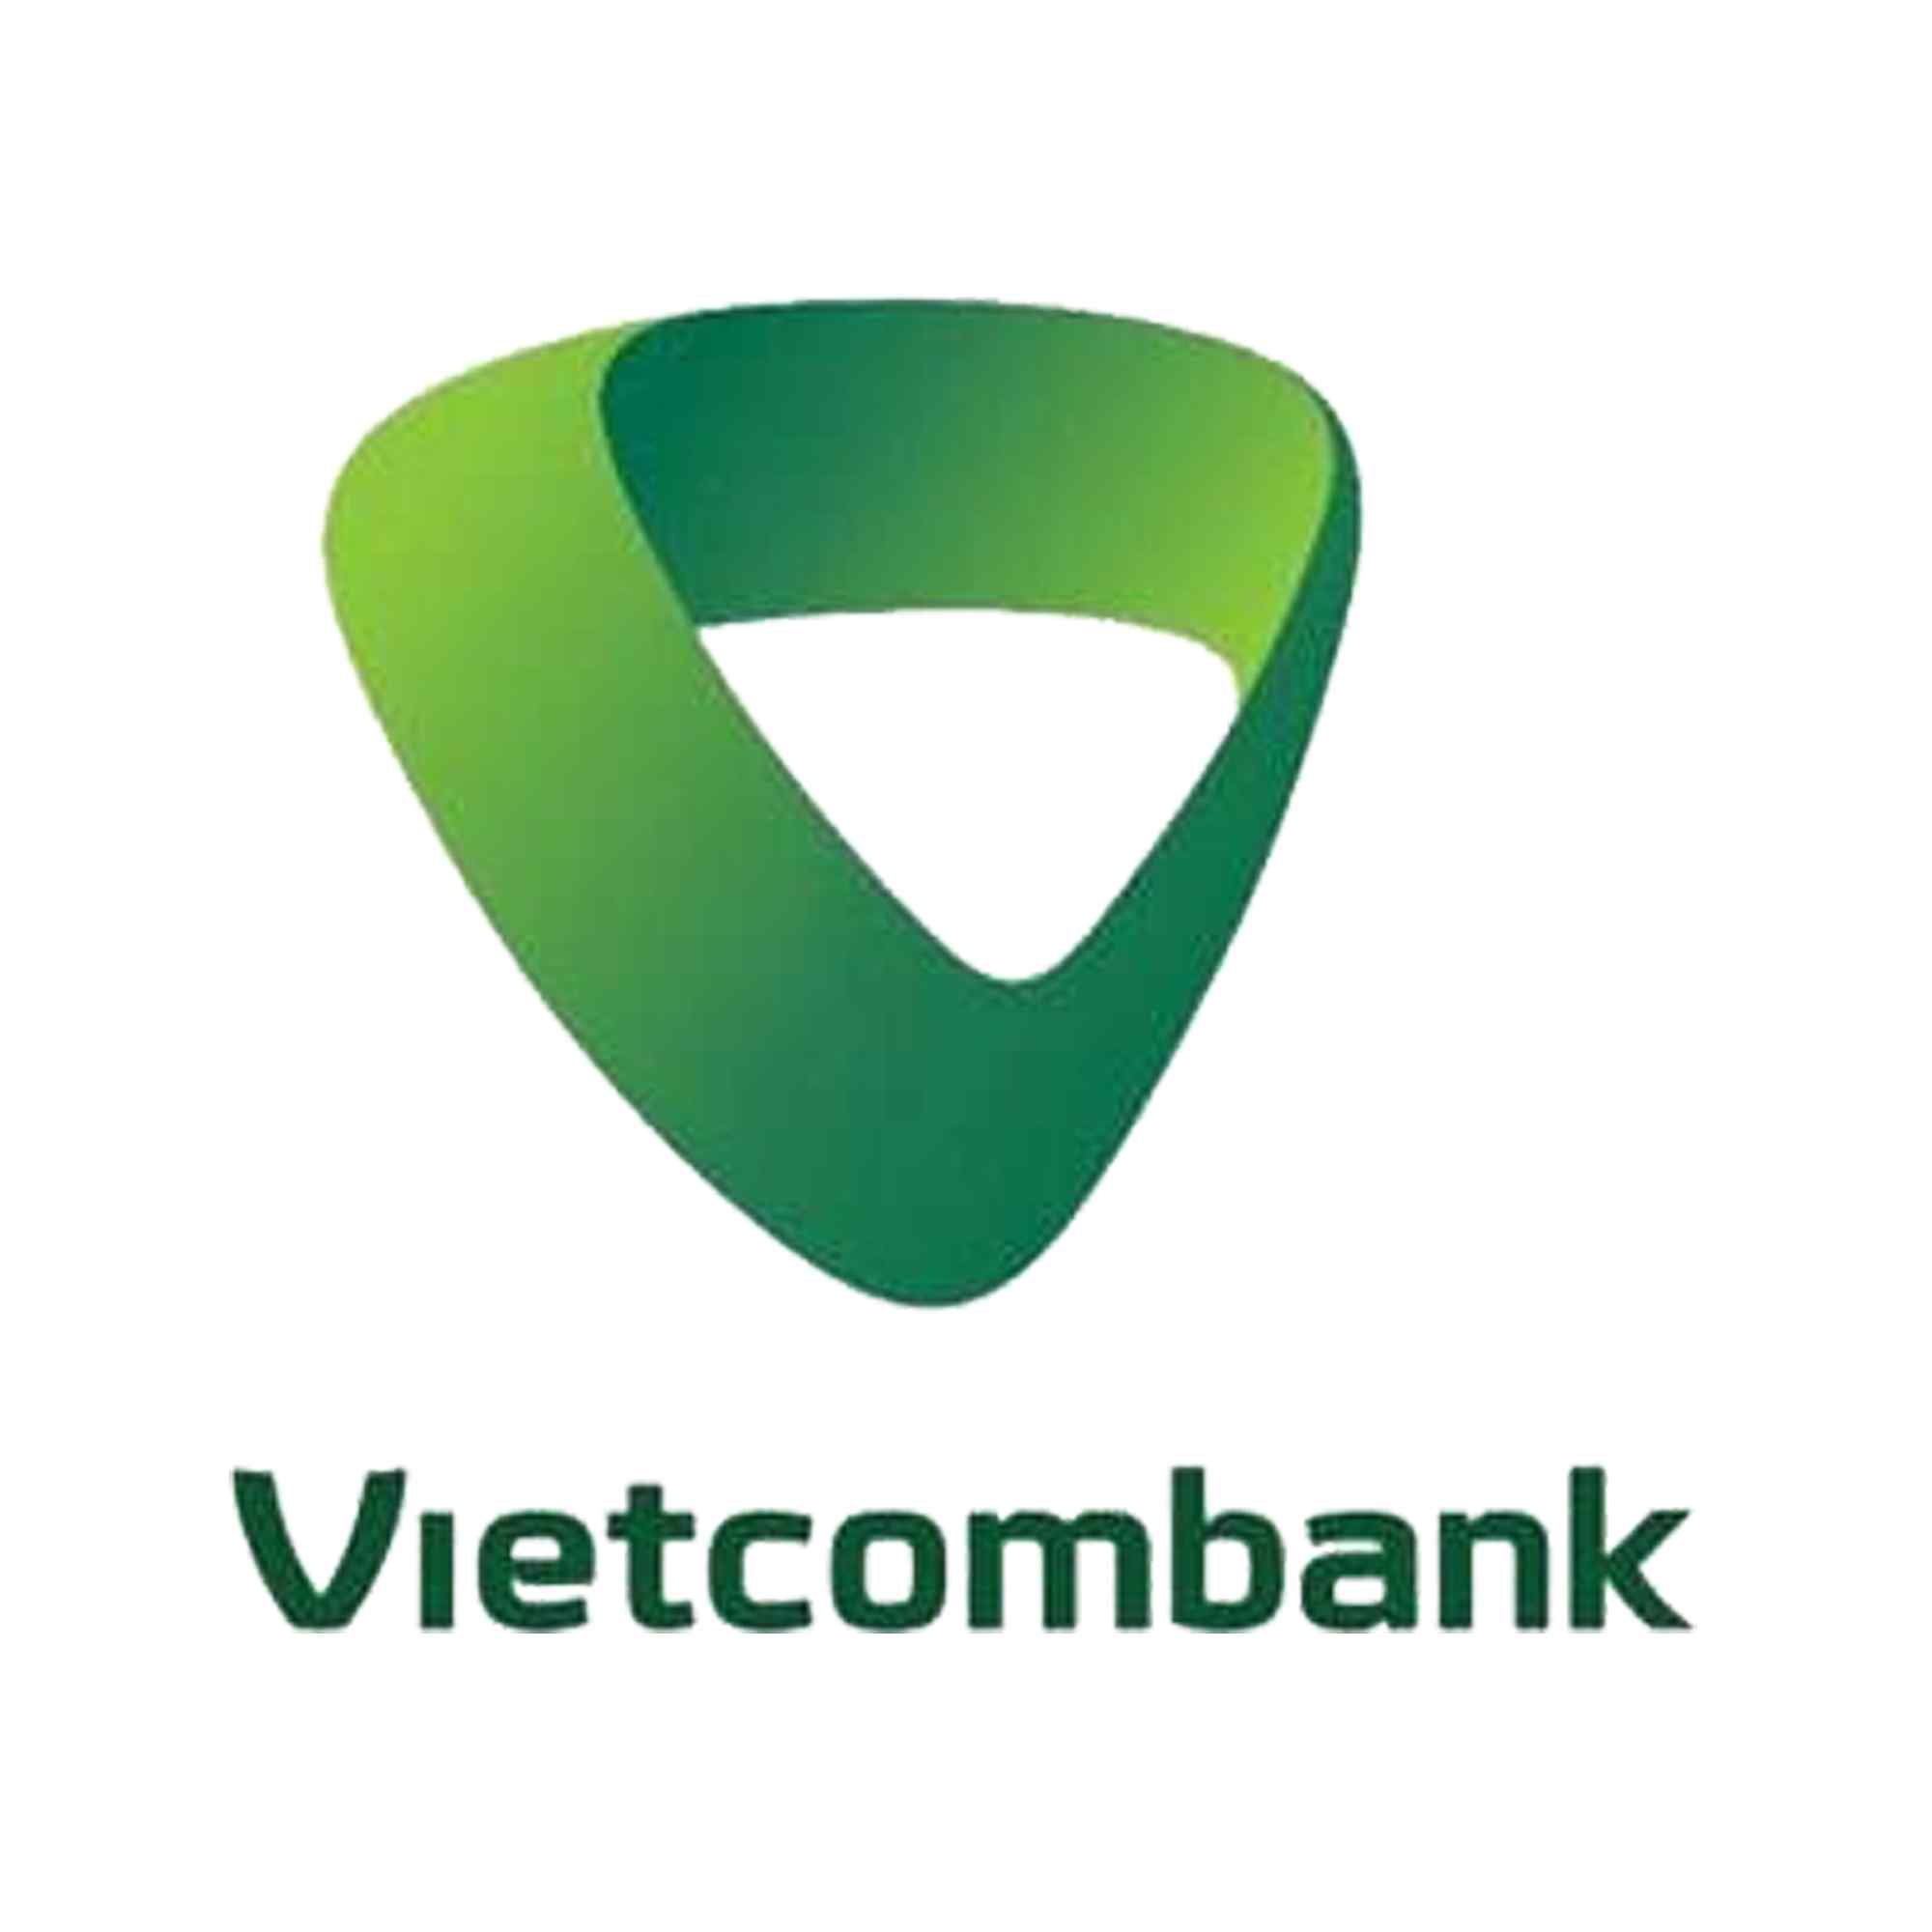 1521190030 brasol.vn logo vietcombank logo vietcombank